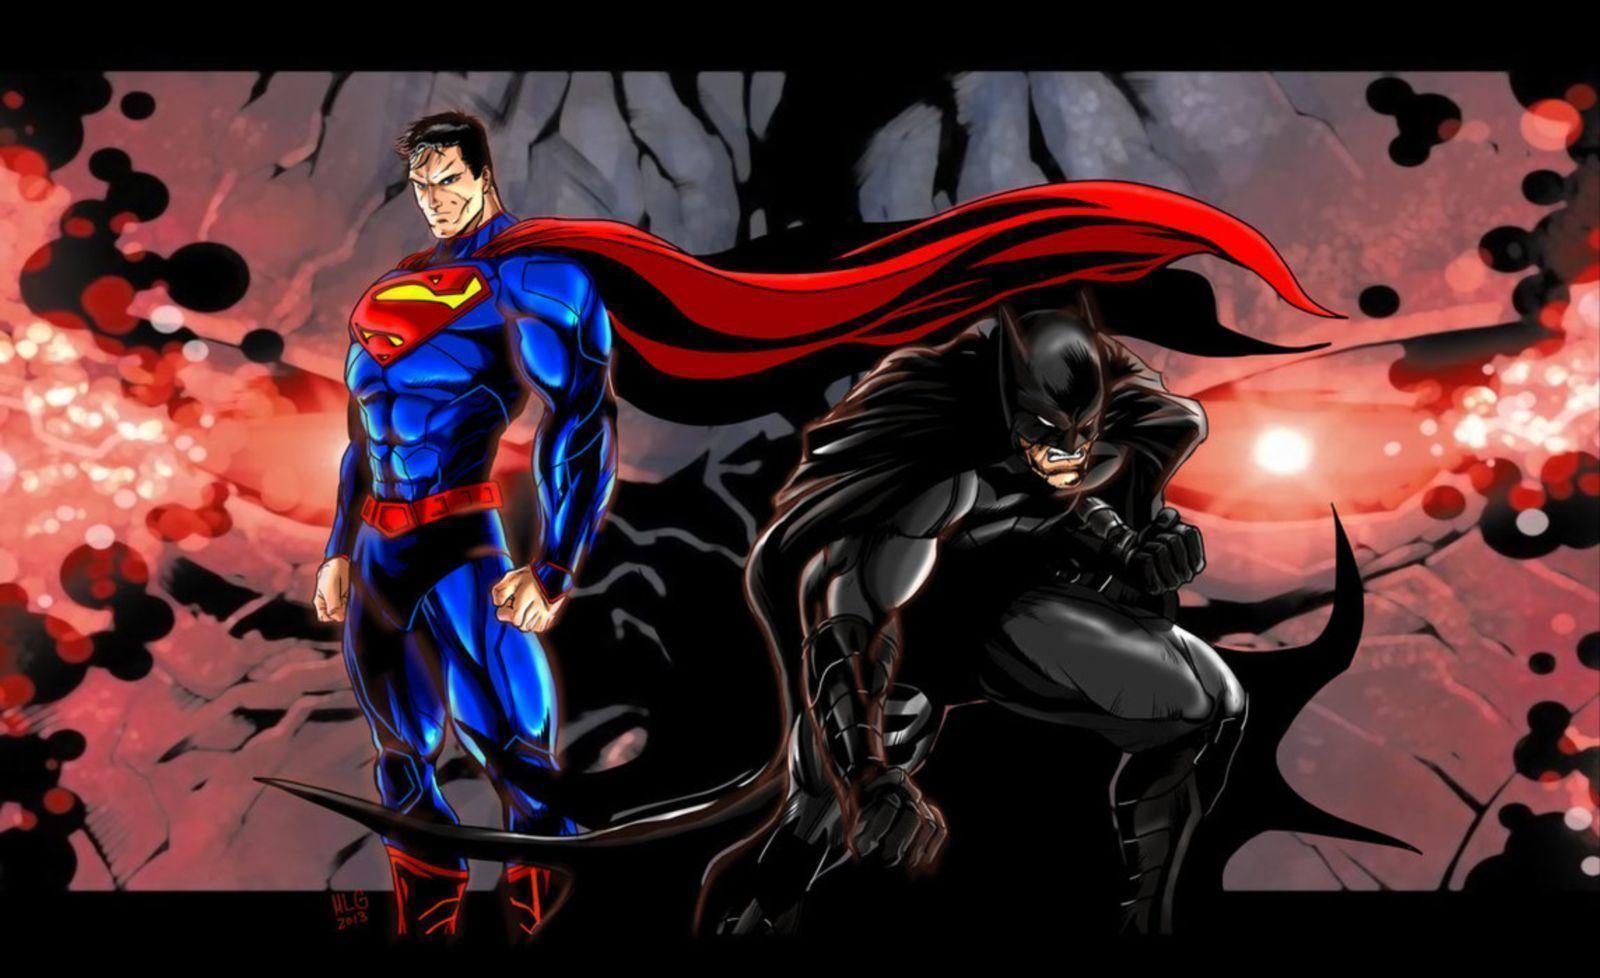 Batman Vs Superman Wallpaper Best 1600x978PX Wallpaper Best